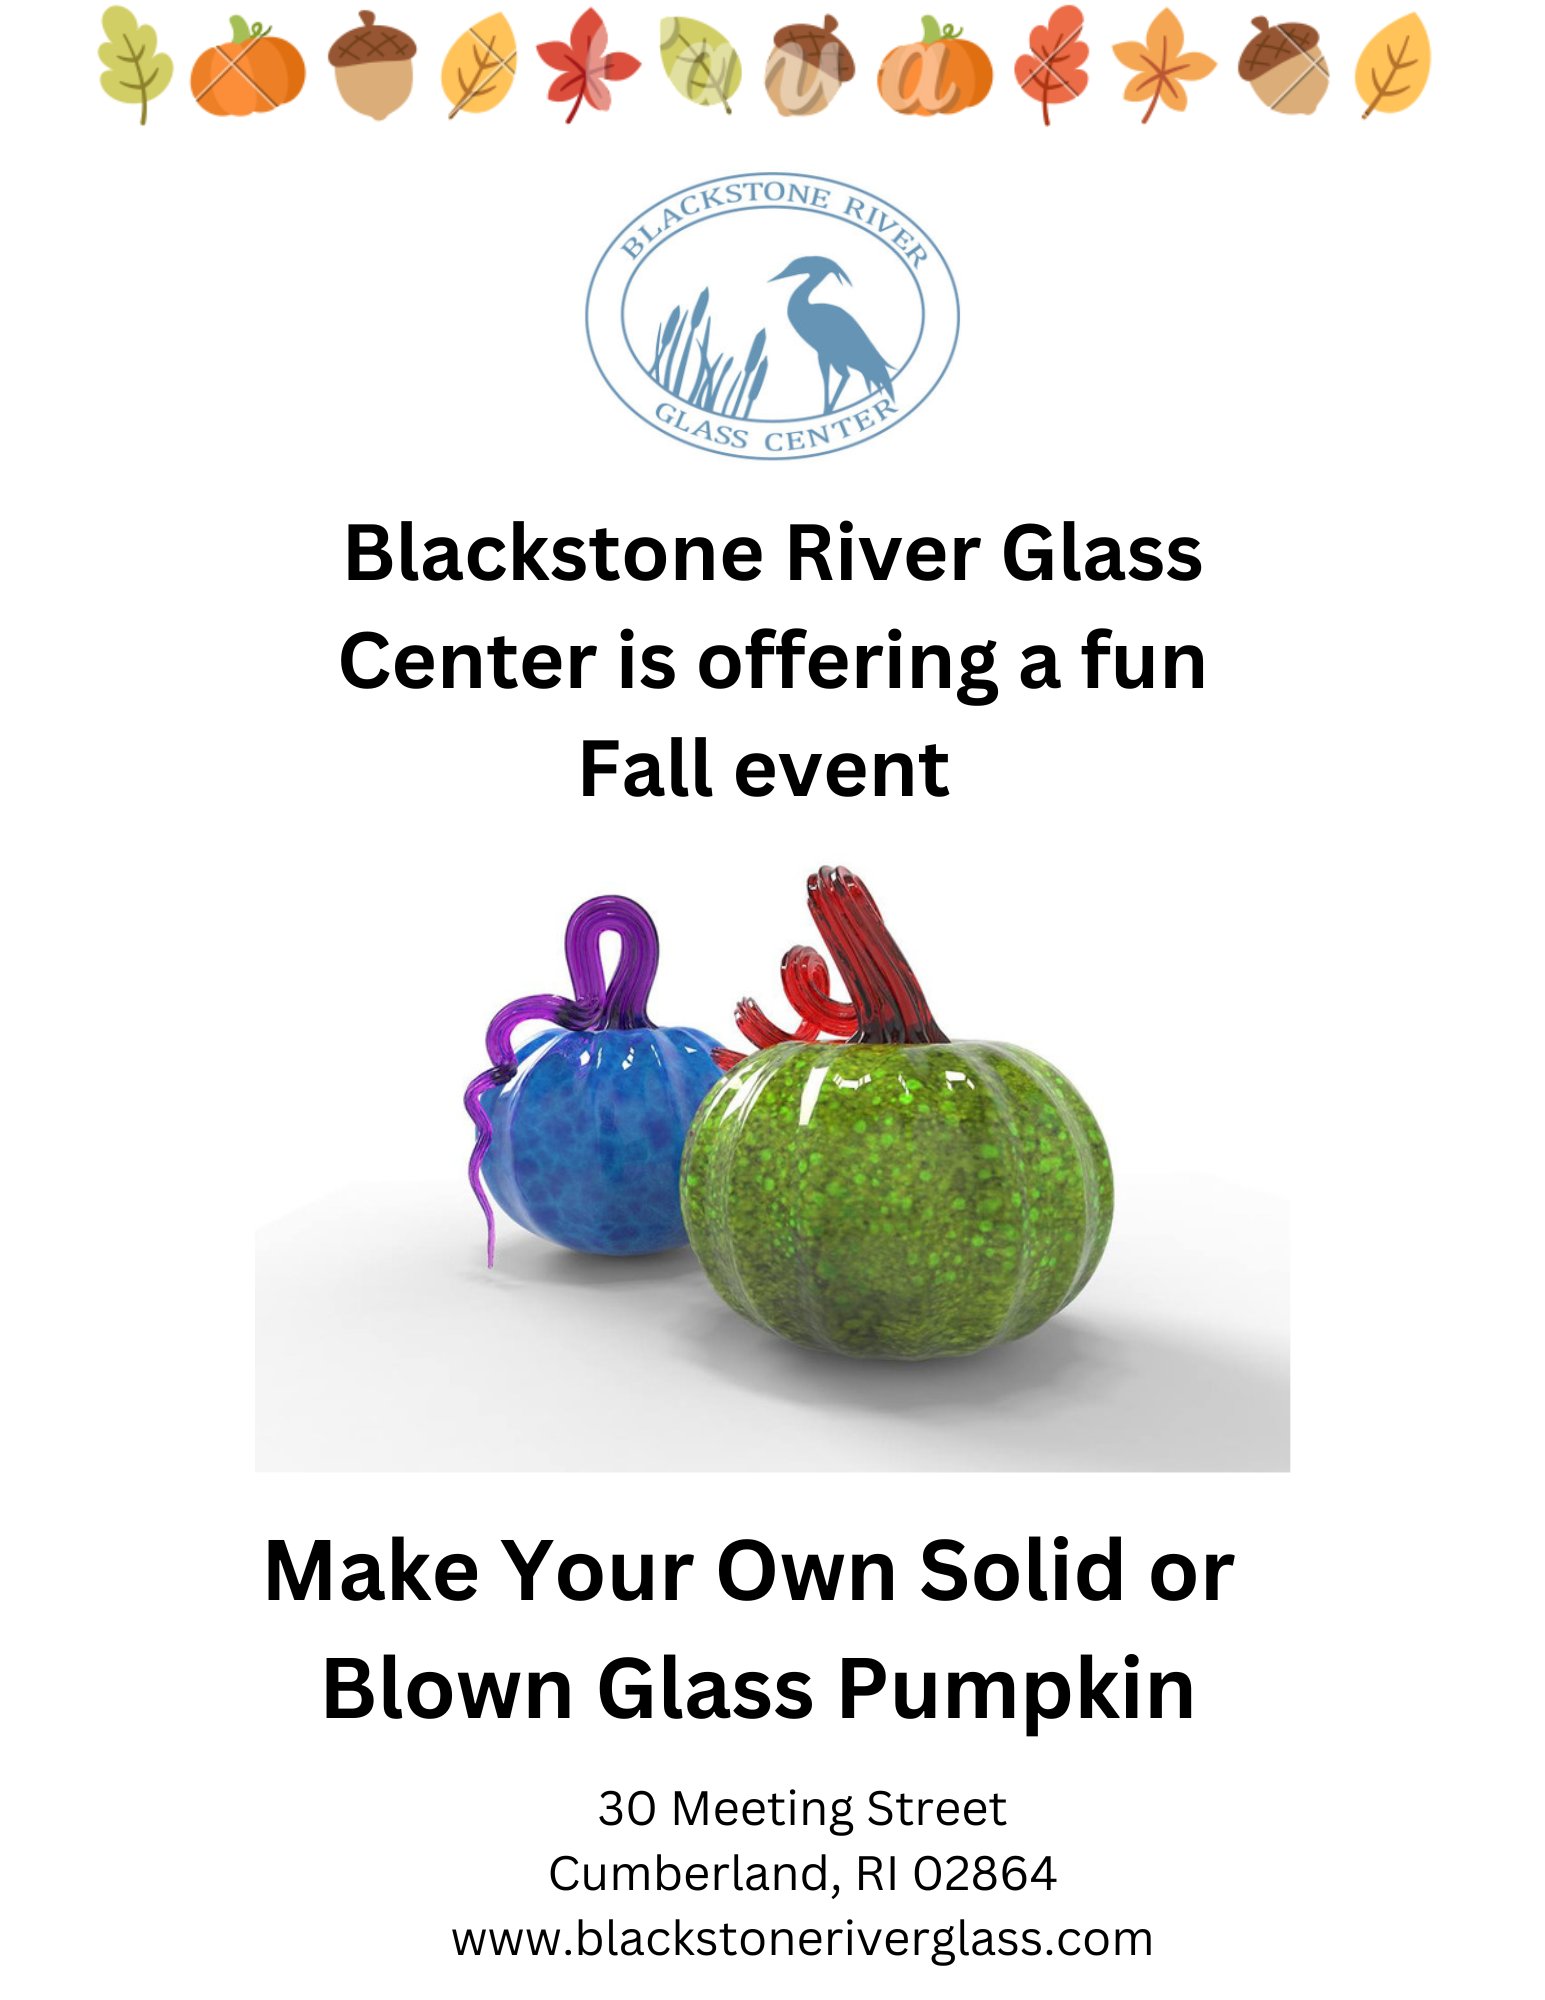 Blackstone River Glass Center: Expert Glass Blowing Education in RI